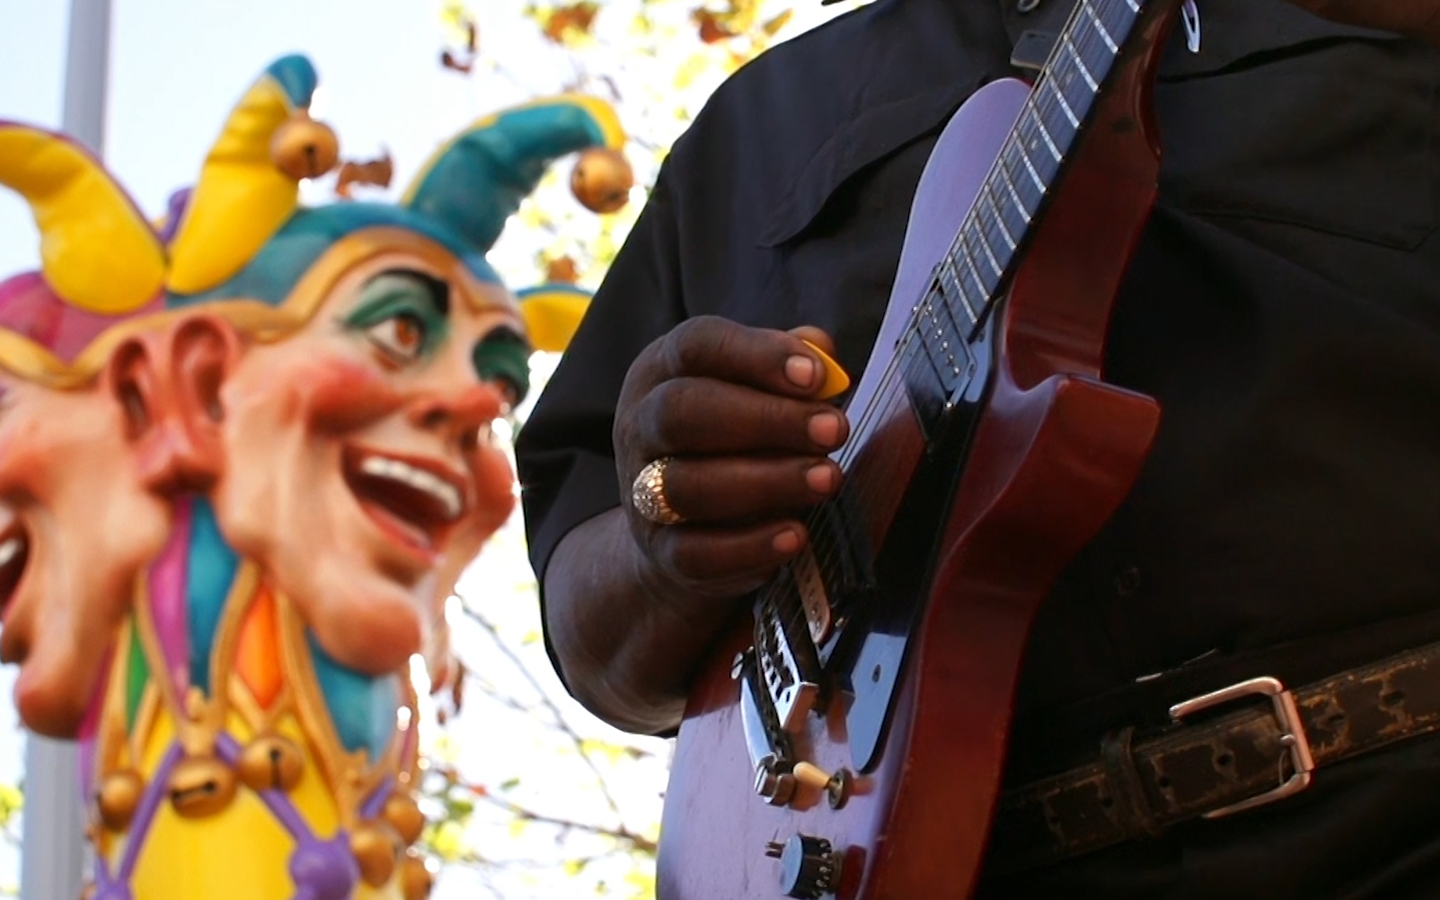 universal mardi gras street performers with authentic Mardi Gras blues